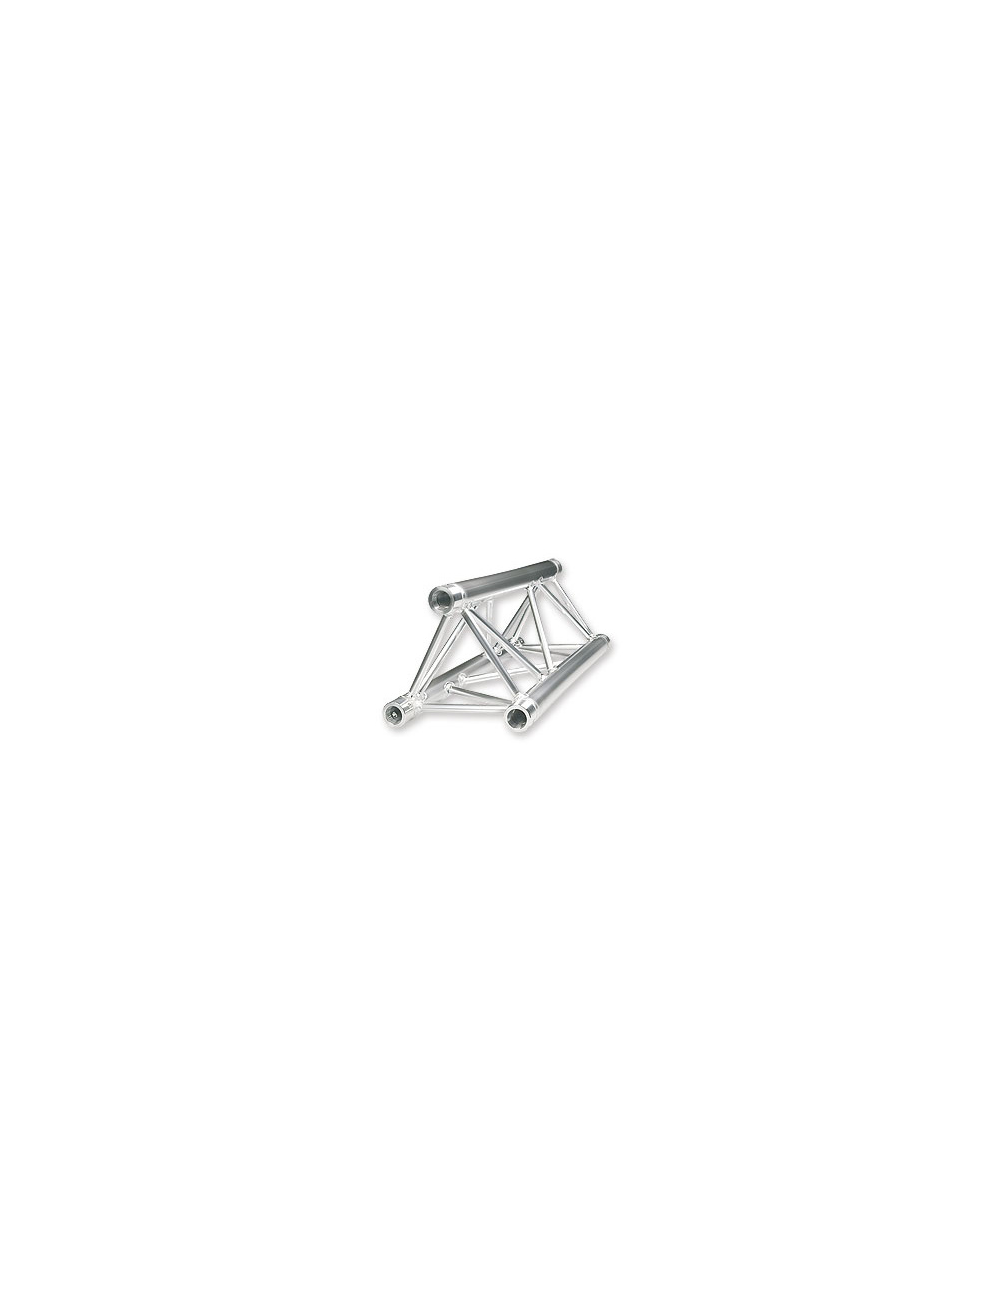 Triangular structure 290 ASD 1m - SX29100